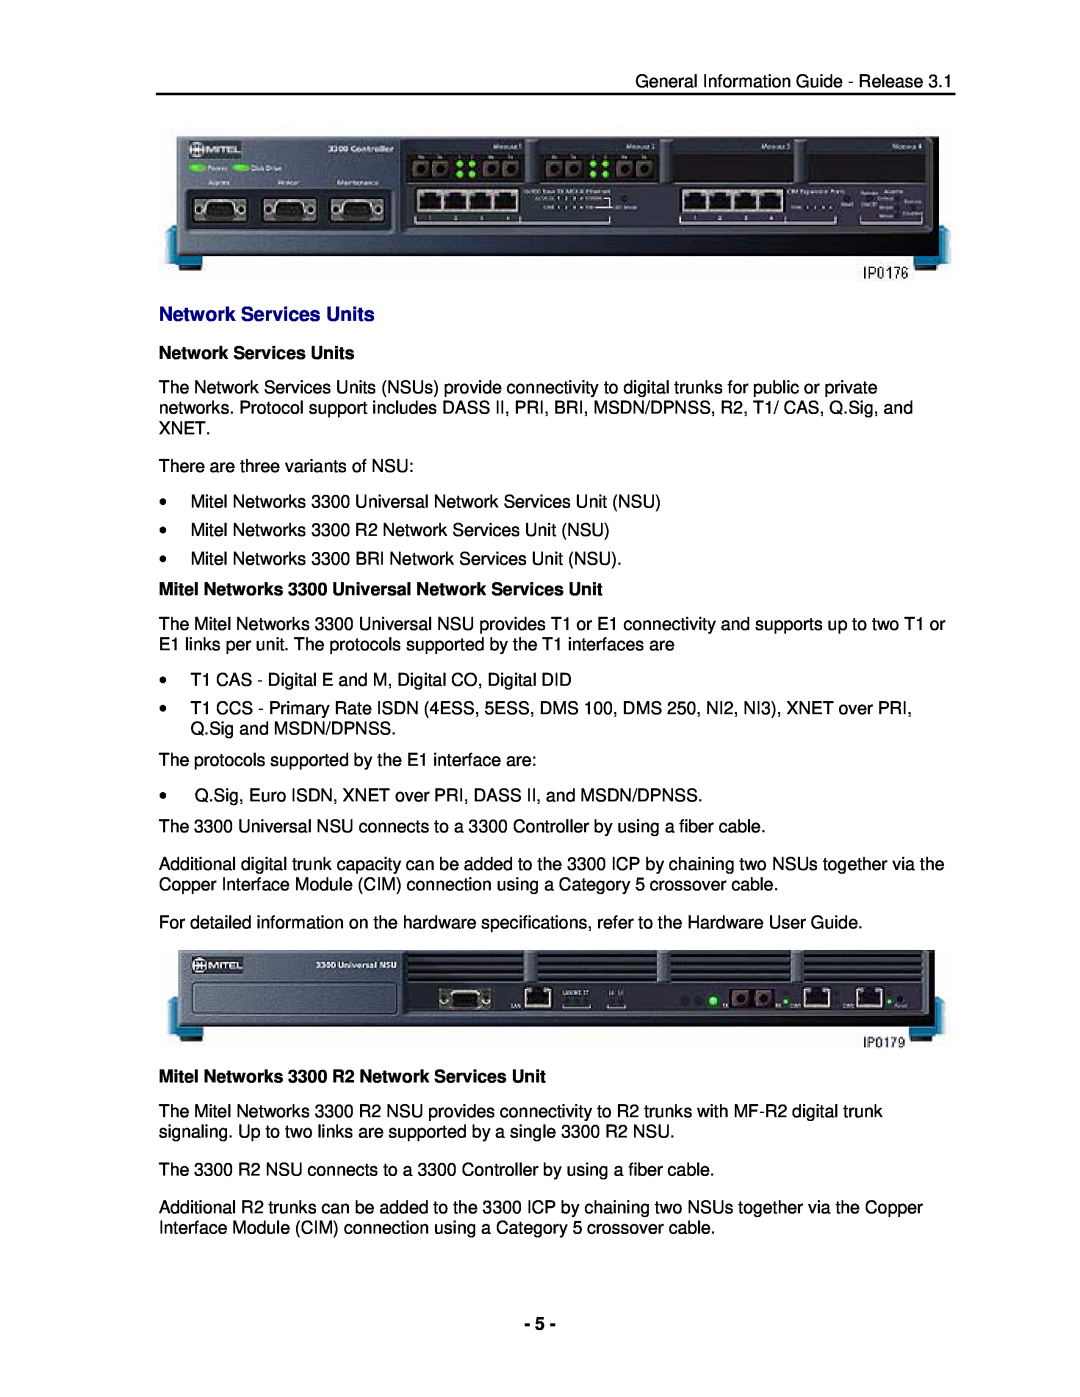 Mitel manual Network Services Units, Mitel Networks 3300 R2 Network Services Unit 